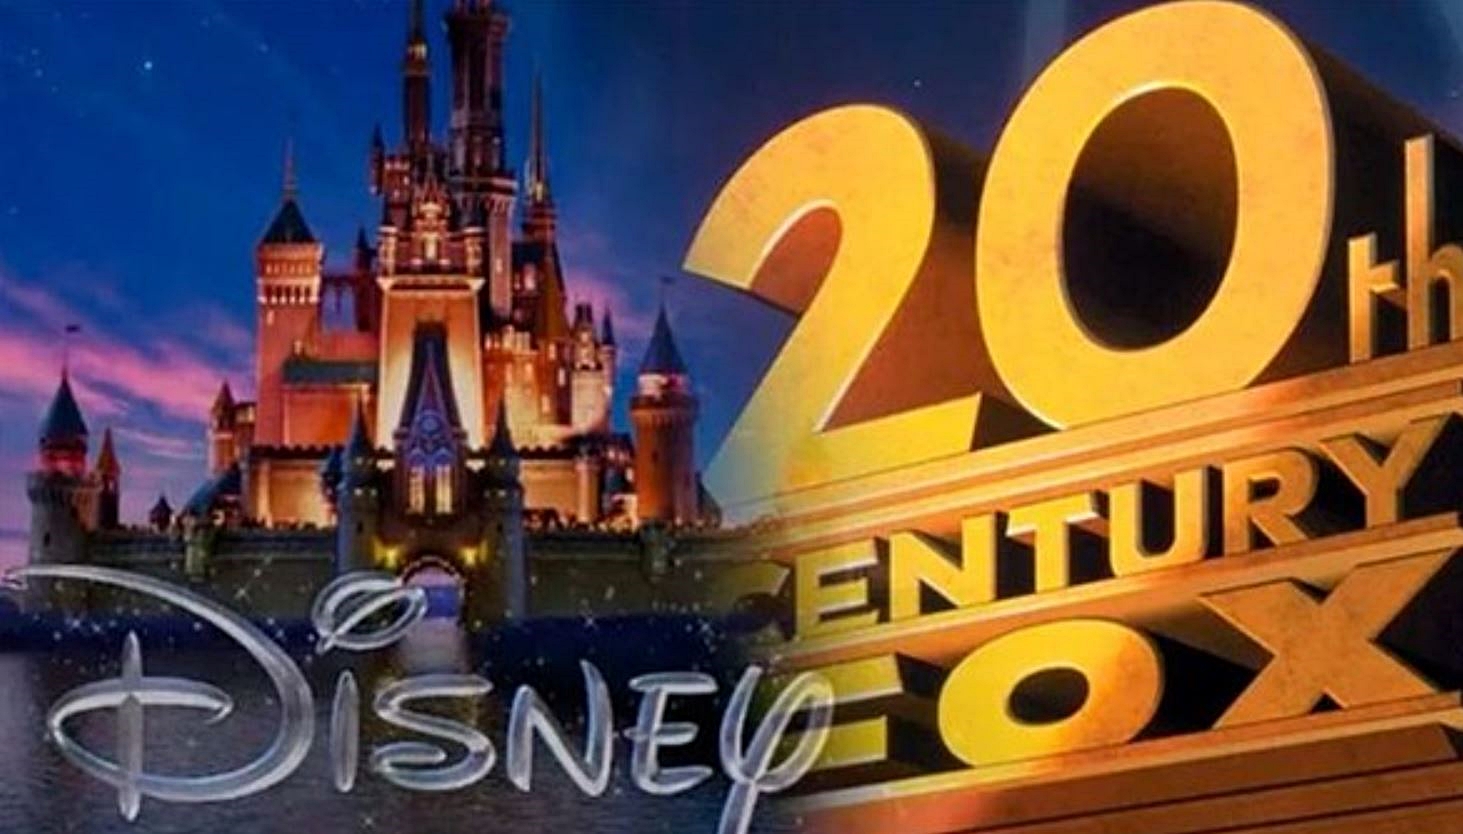 Walt Disney logo with Cinderella castle and 21st Century Fox spotlight logo